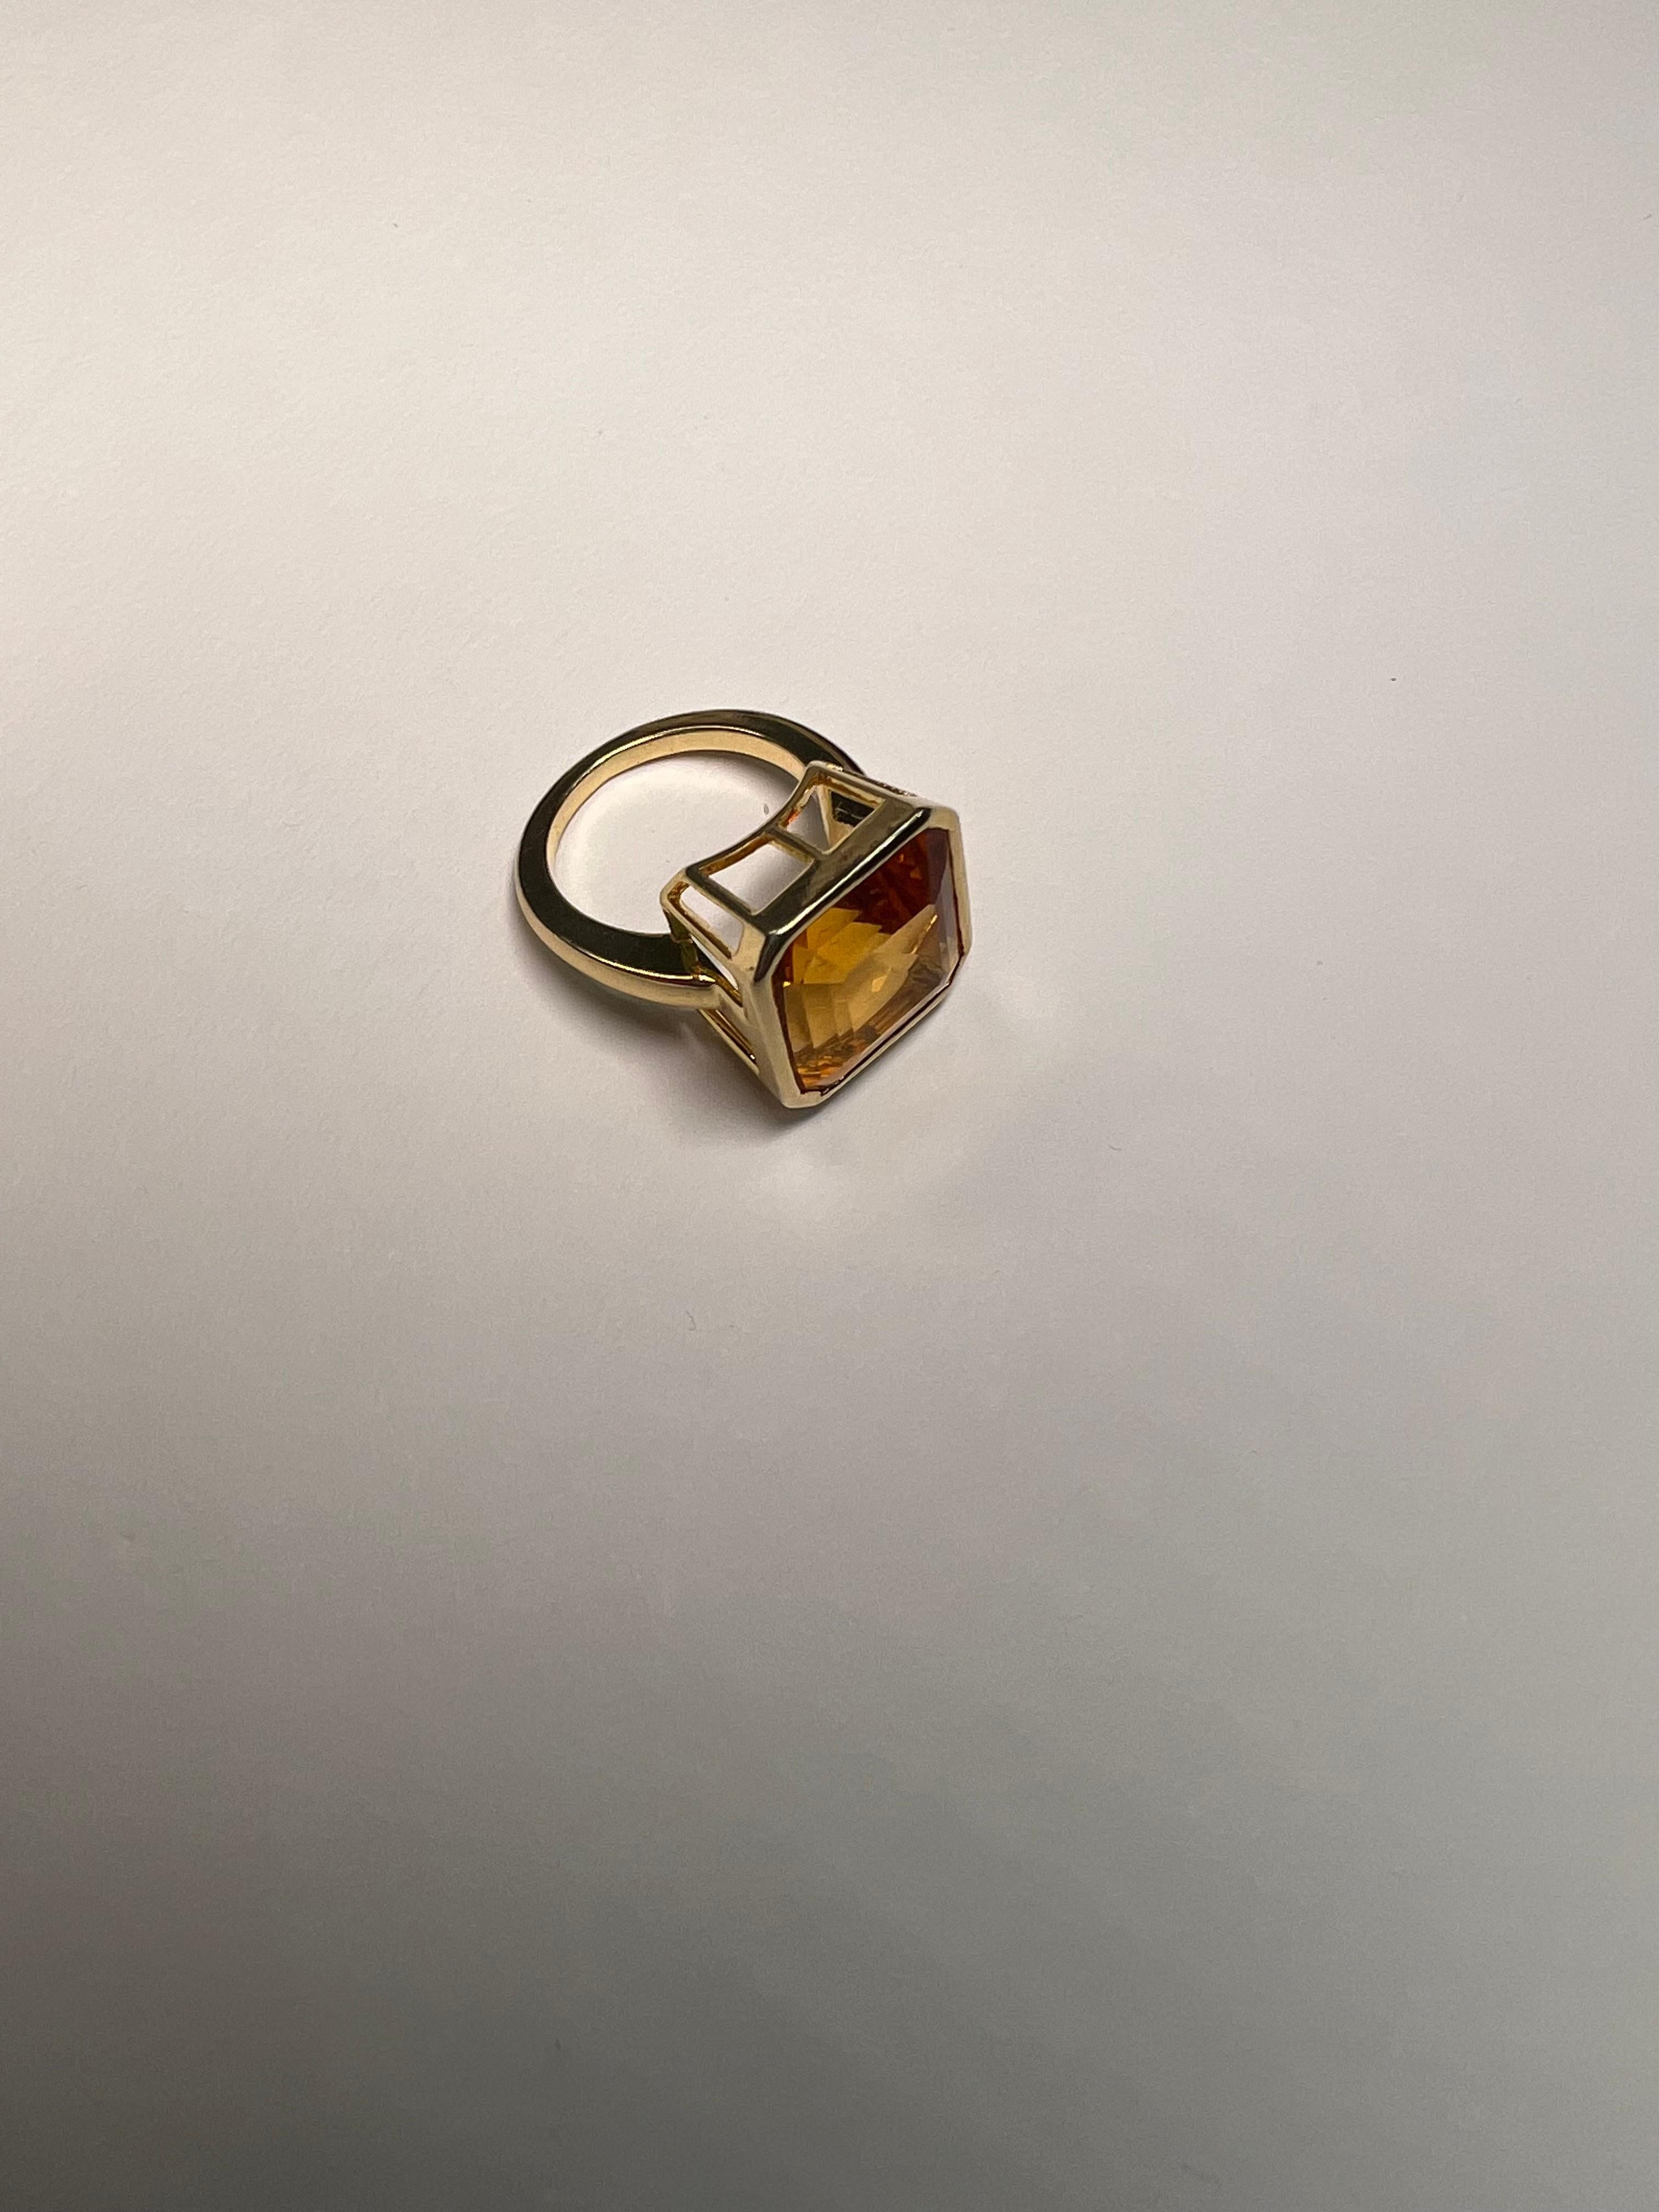 Rare 7.88ct Orange Citrine Pinky Ring, Bezel Set & Handmade in 14k Yellow Gold For Sale 8